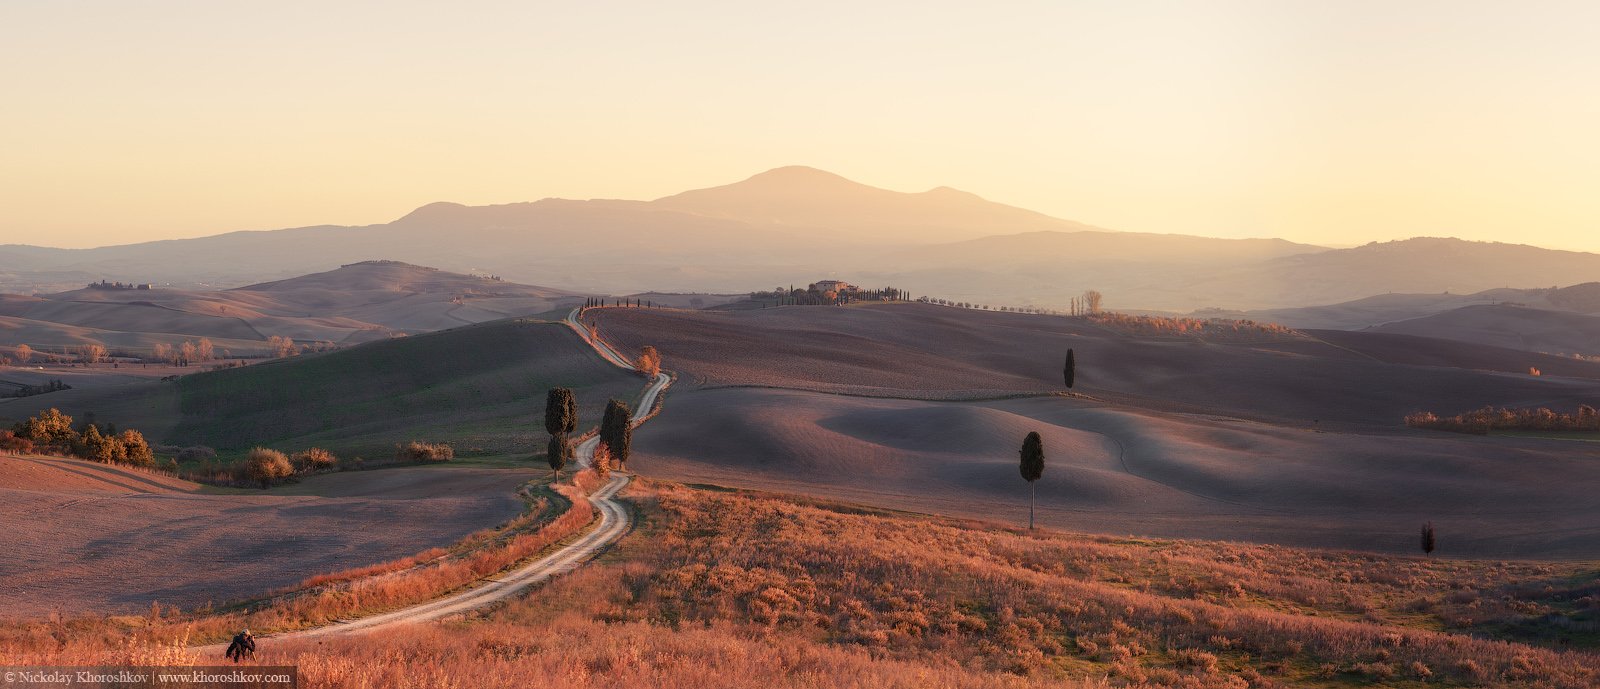 Countryside, Italy, Landscape, Panorama, Sunset, Tuscany, Италия, Панорама, Пейзаж, Тоскана, Николай Хорошков